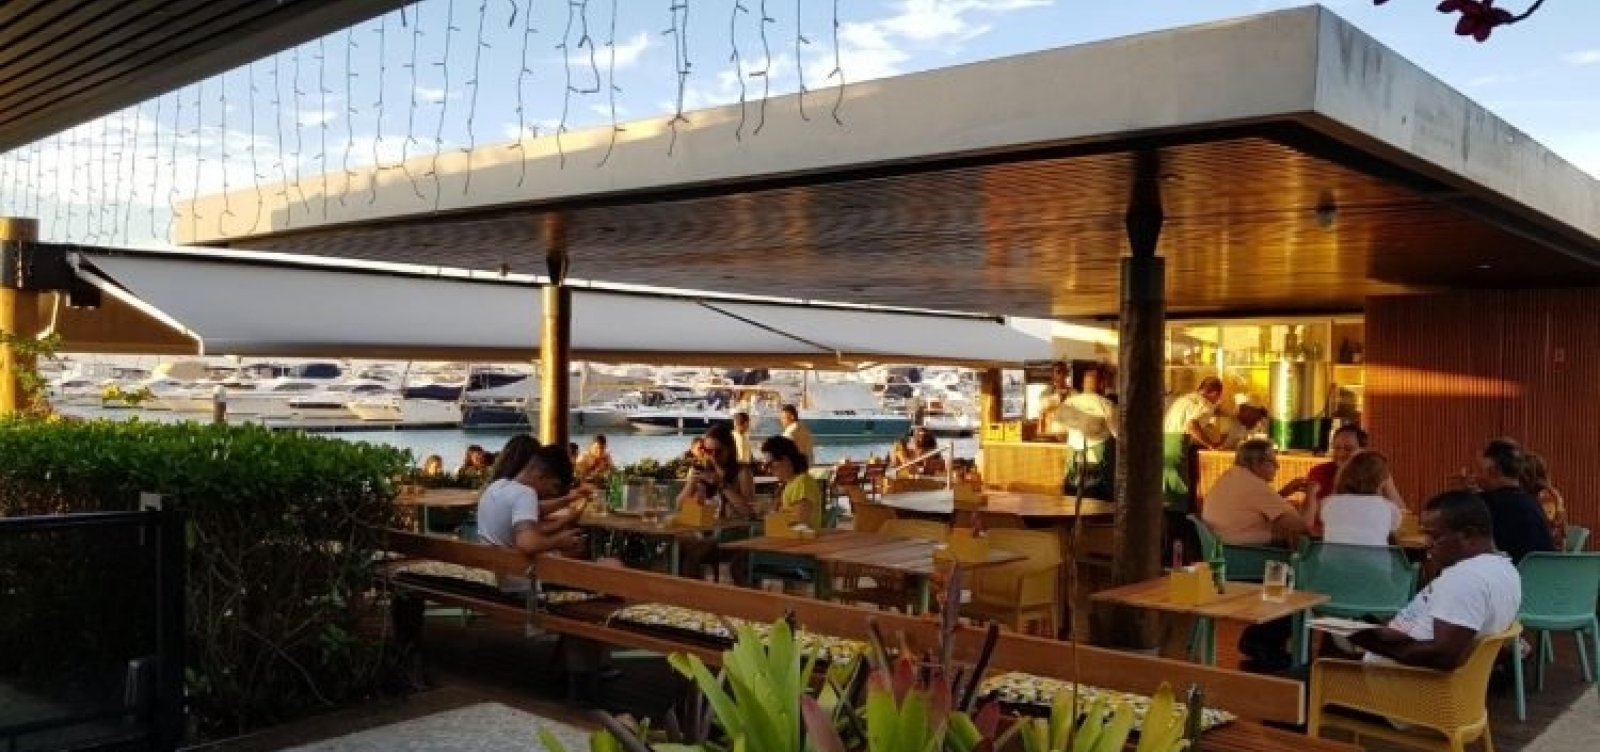 Bahia Marina ganha novo bar e restaurante a partir de agosto